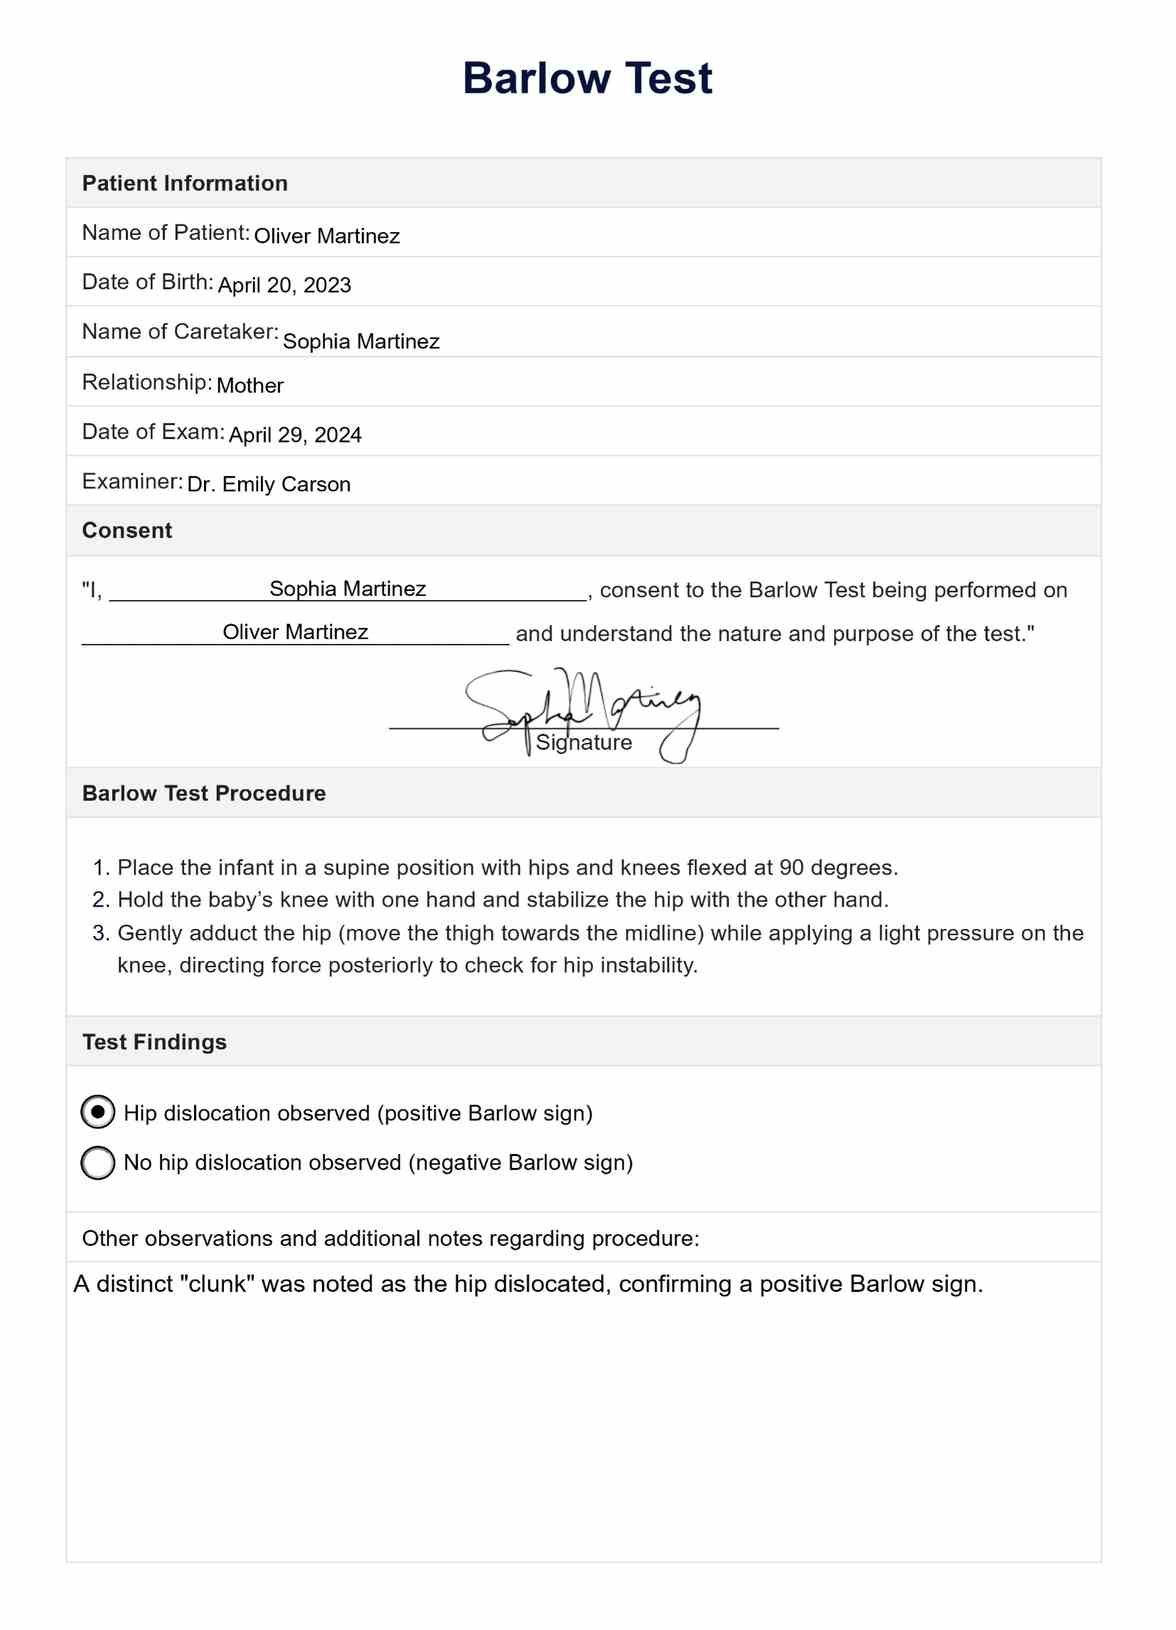 Barlow Test PDF Example